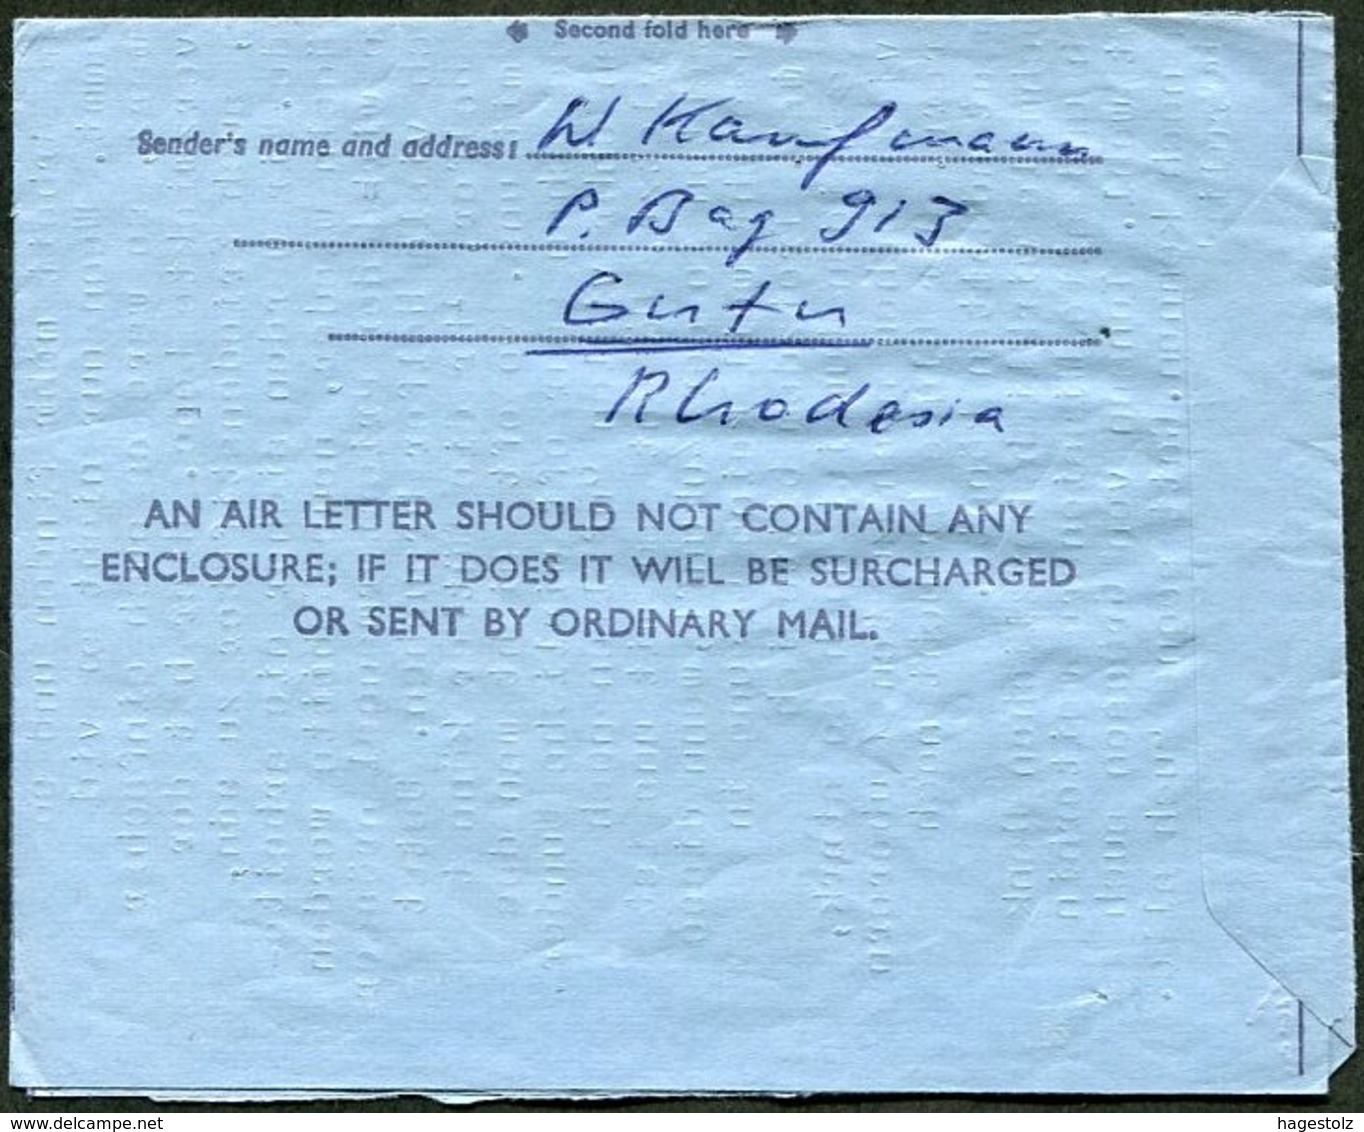 S. Rhodesia 1966 LION Löwe Aerogramme BASERA (Mutero Mission Gutu) Franked Ansellia Orchid Air Letter Cover >Switzerland - Felinos